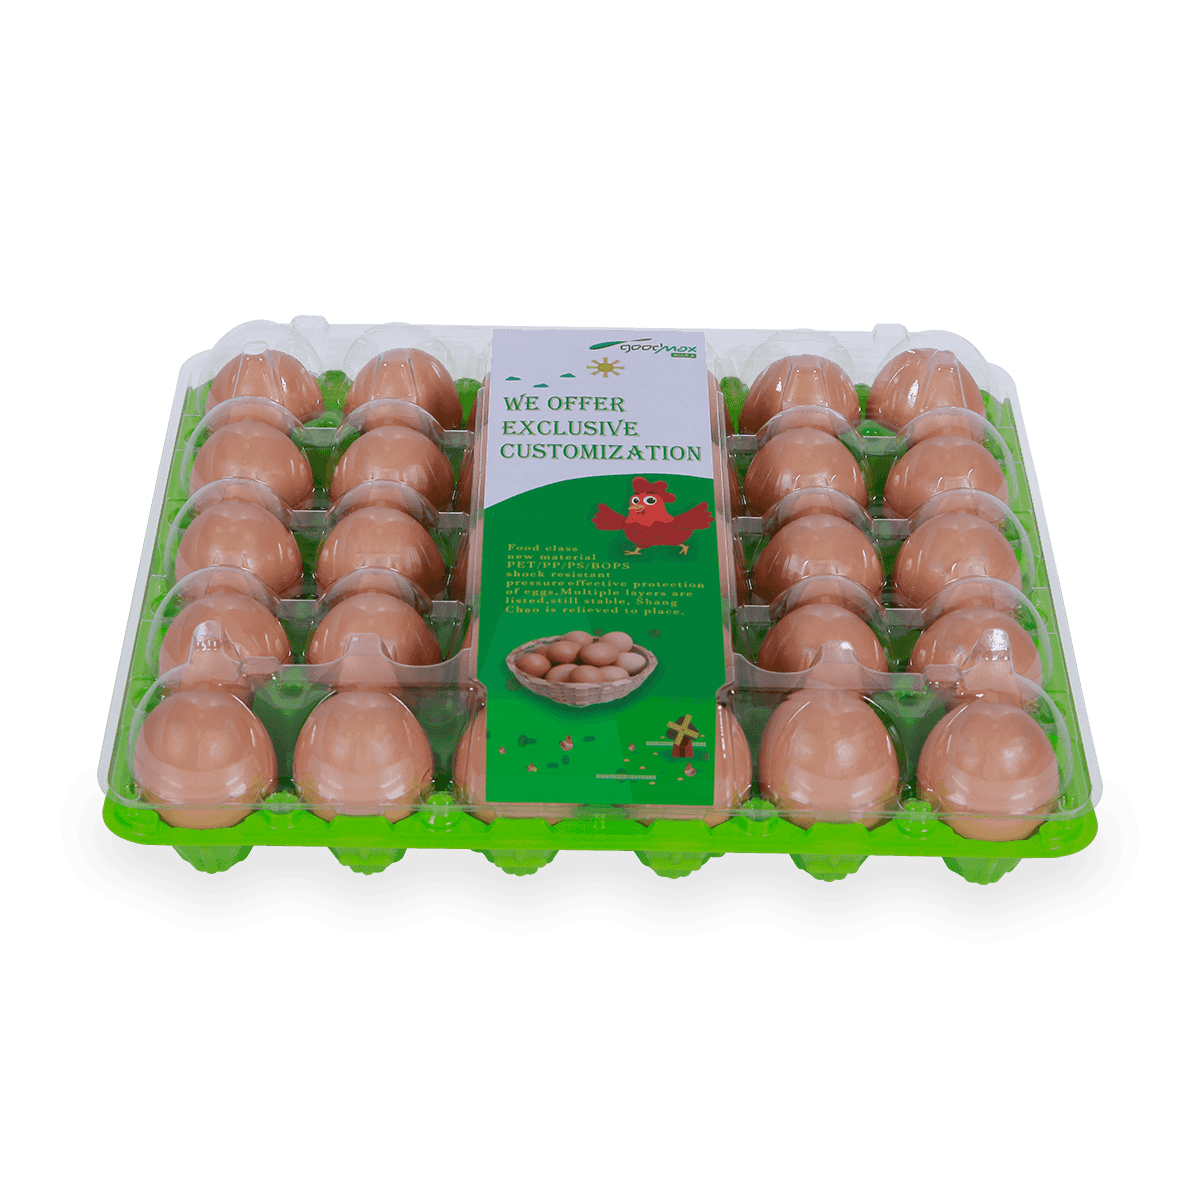 Cartón de huevos de 30 agujeros para granjas avícolas 